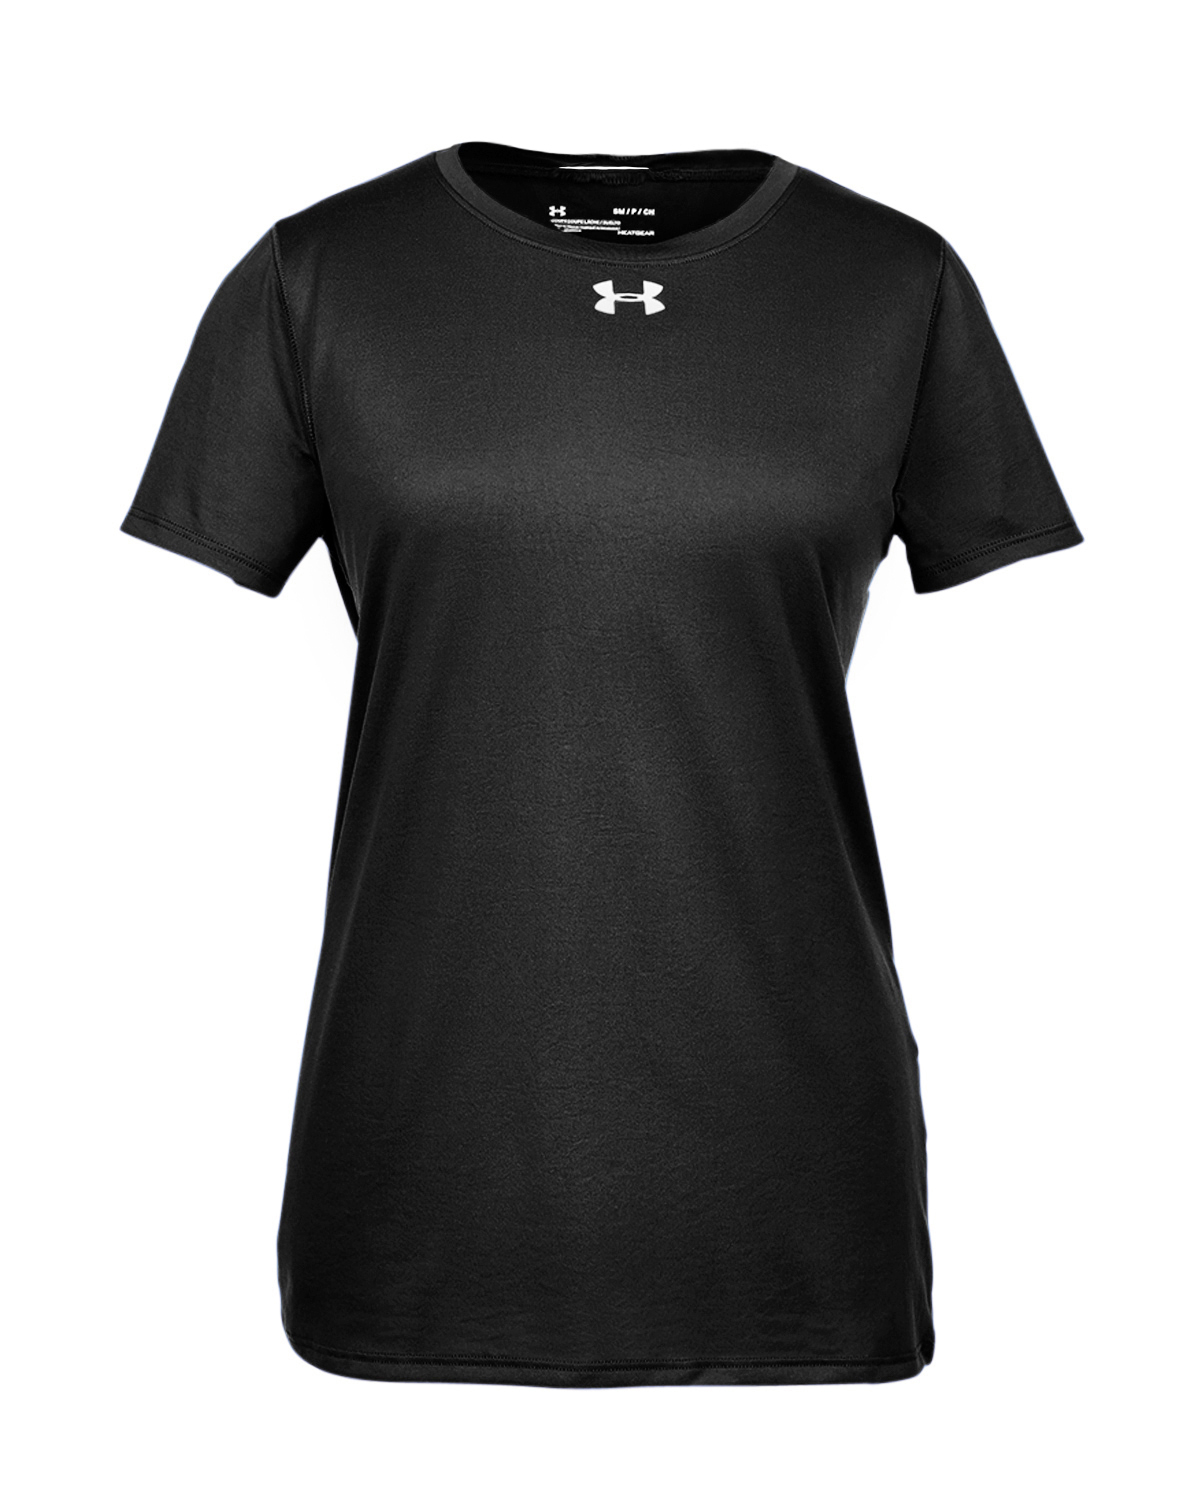 Under Armour 1305510 - Ladies' Locker T-Shirt 2.0 $18.20 - T-Shirts